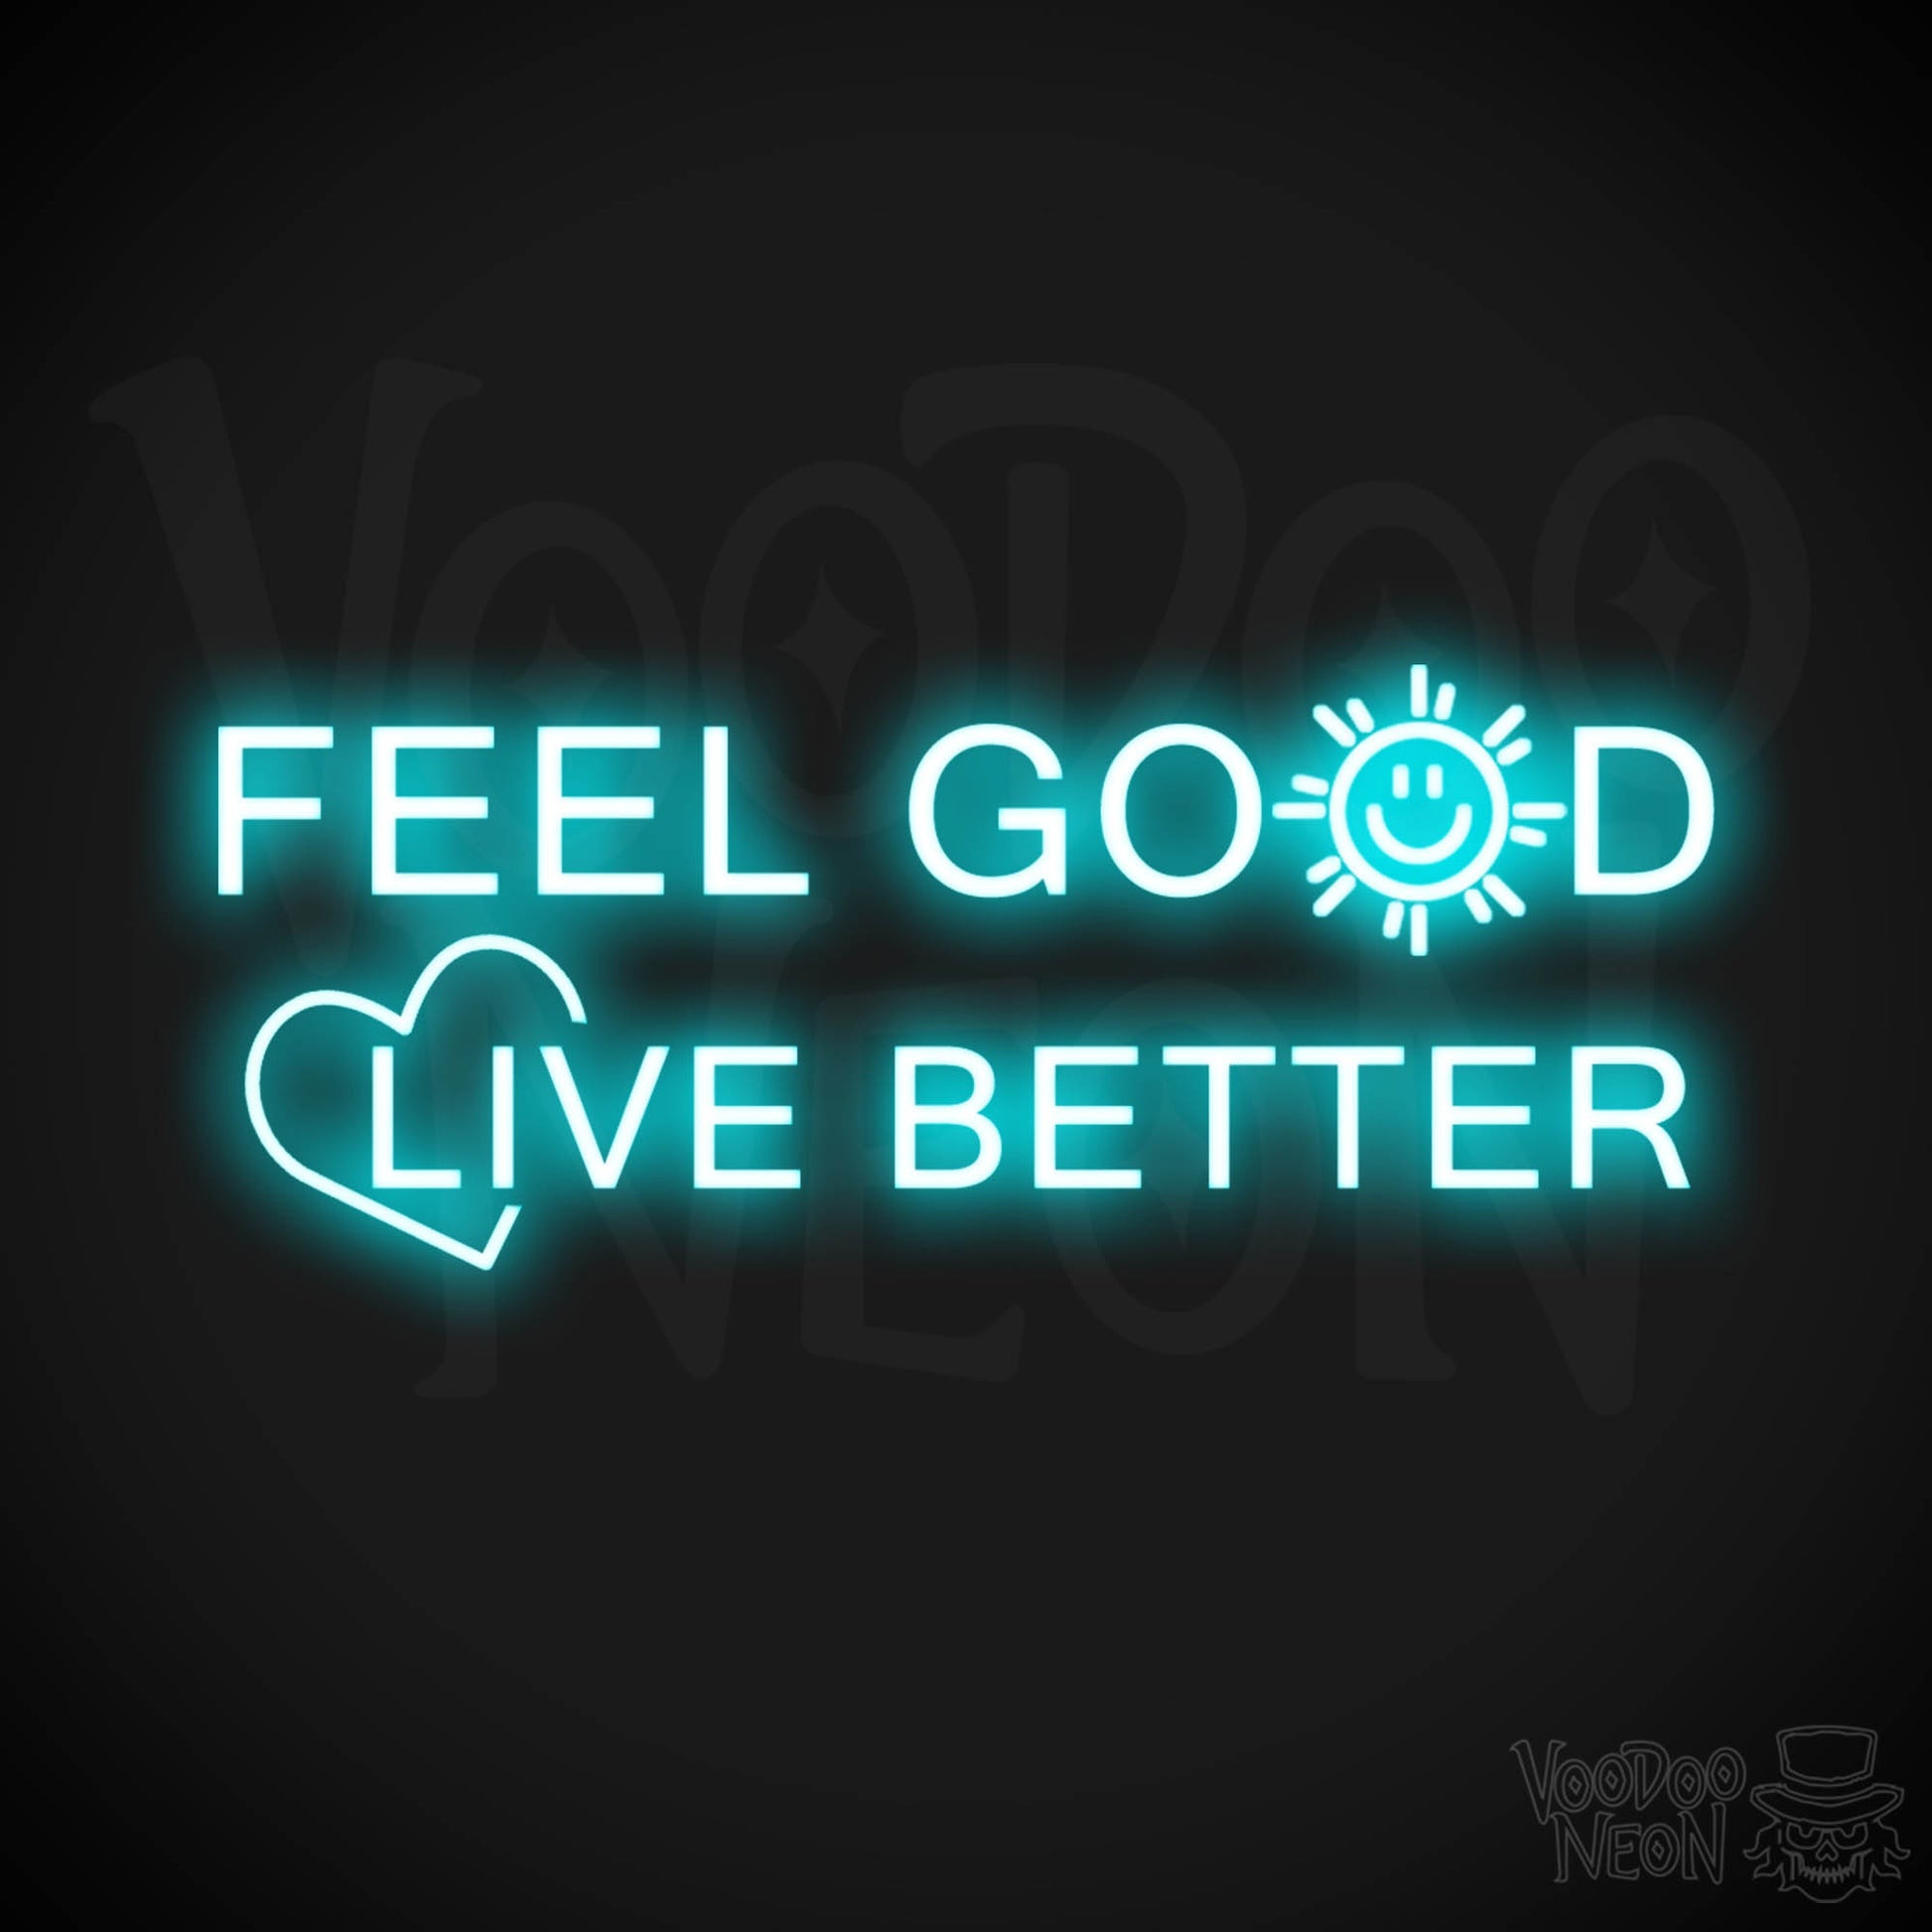 Feel Good Live Better Neon Sign - Feel Good Live Better Sign - Color Ice Blue